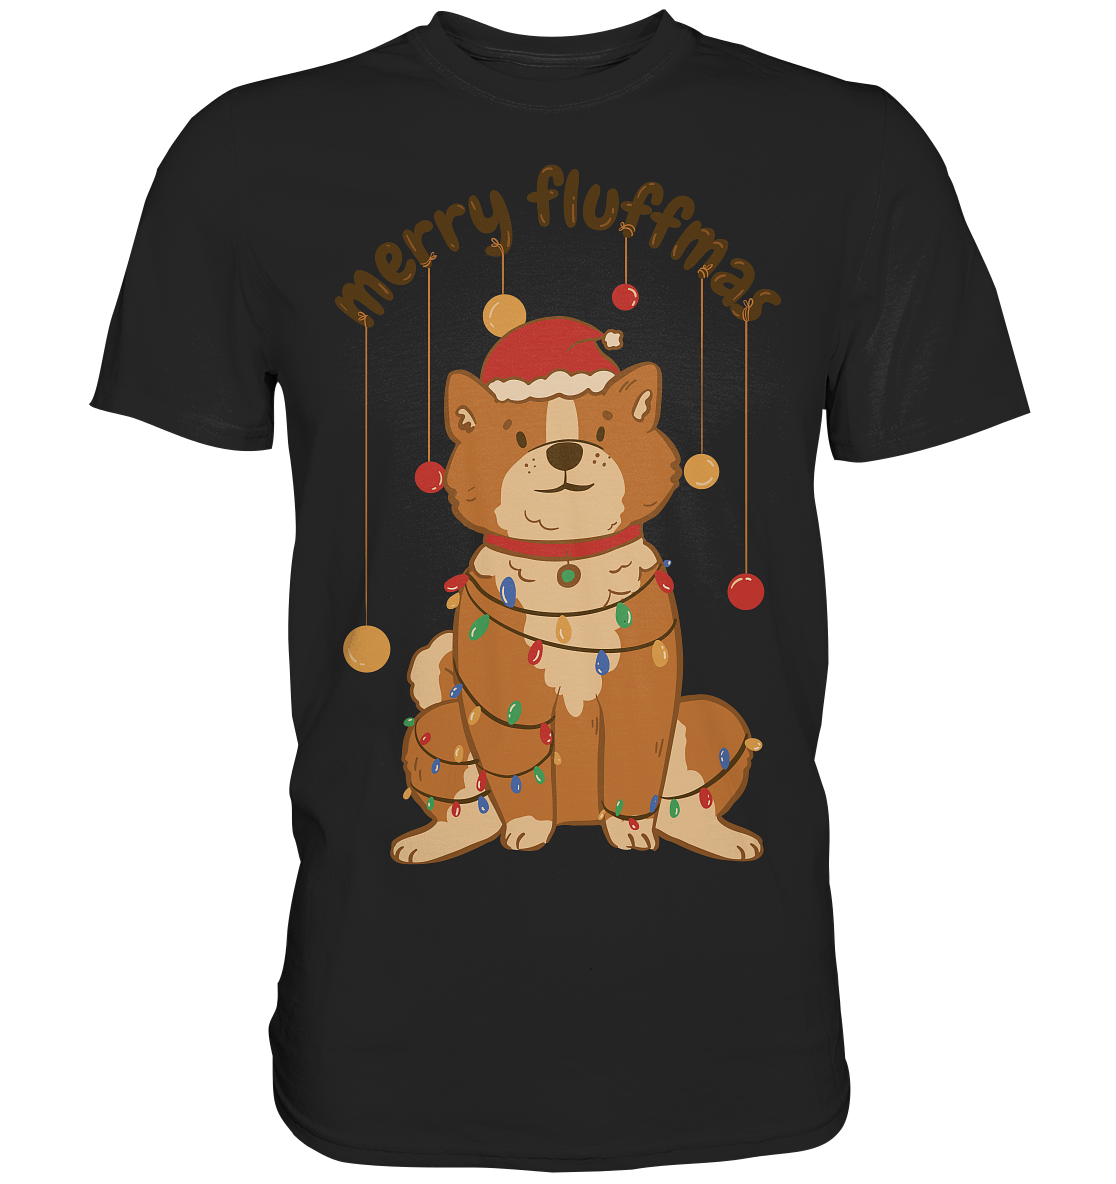 Weihnachtliches Motiv Fun Merry Fluffmas - Classic Shirt